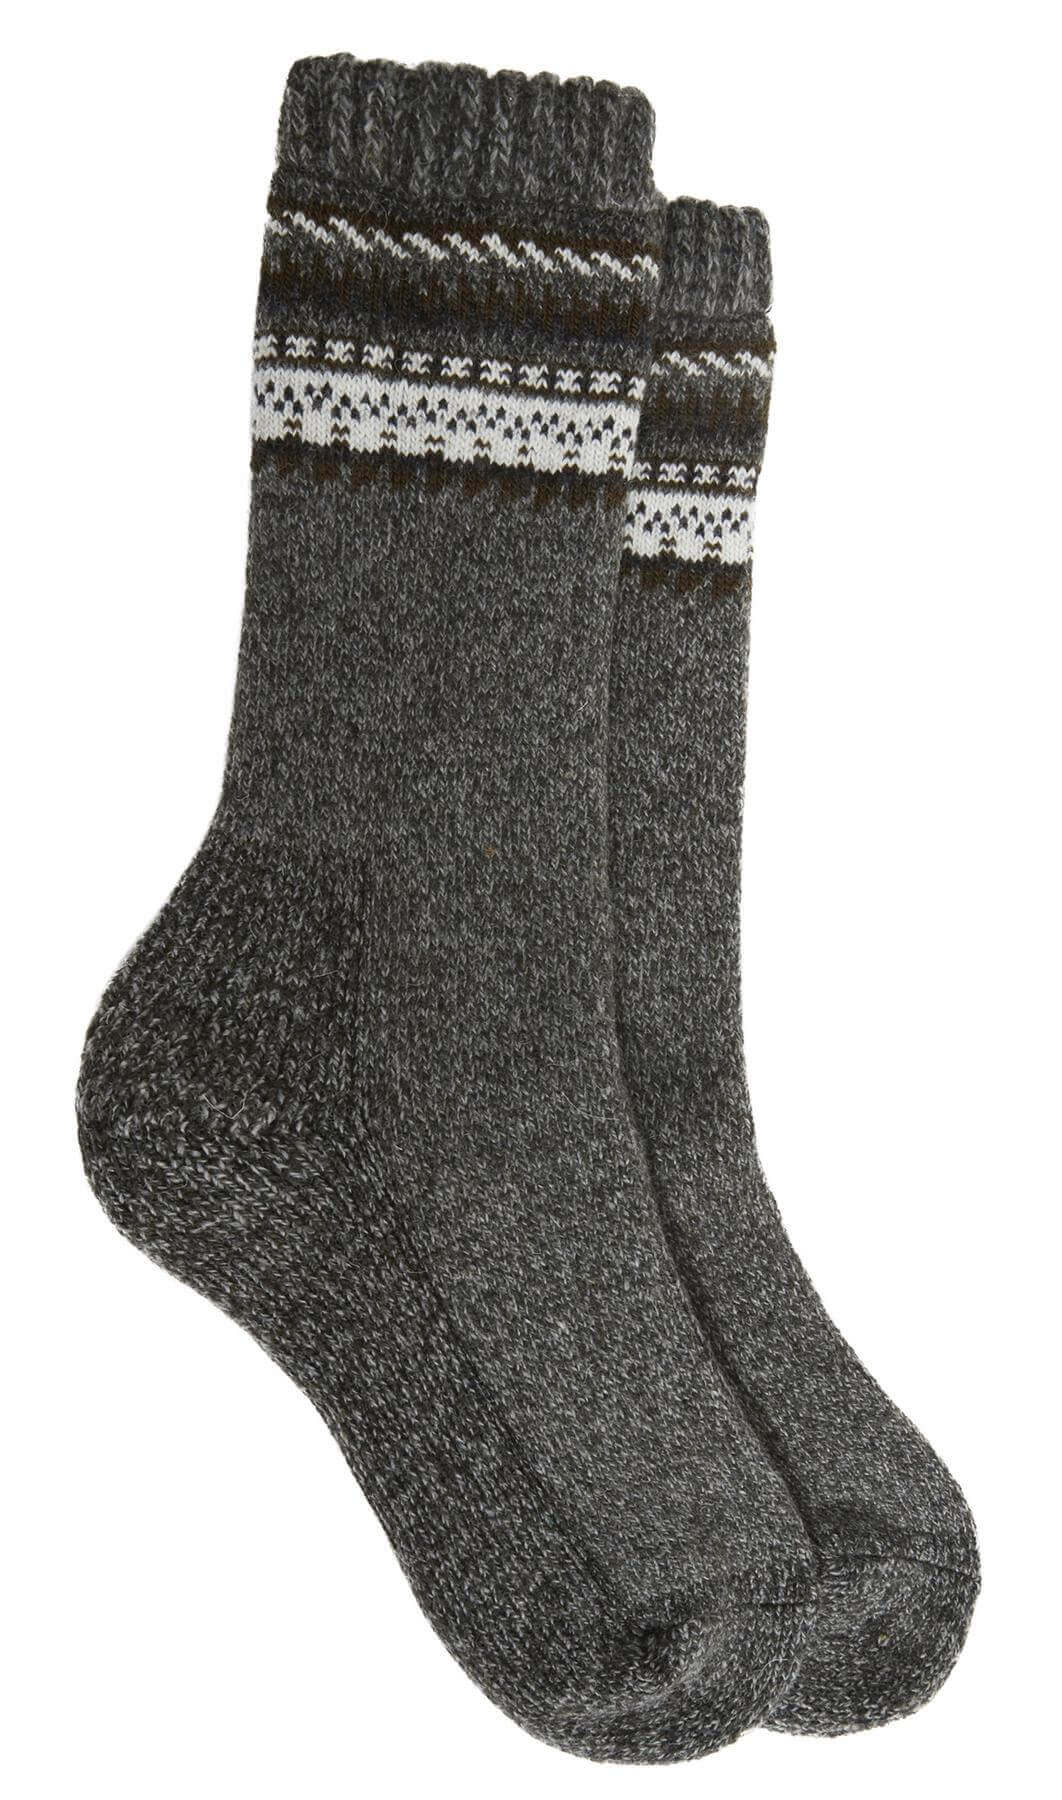 3 Pairs of Men's Merino Wool Socks, Pro Thermal Walking Hiking Work Boot Socks. Buy now for £13.00. A Socks by Sock Stack. 6-11, acrylic, athletics, black, boot, bottom, camo, casual, comfortable, cosy, dressing, elastane, gym, hike, hiking, long socks, m